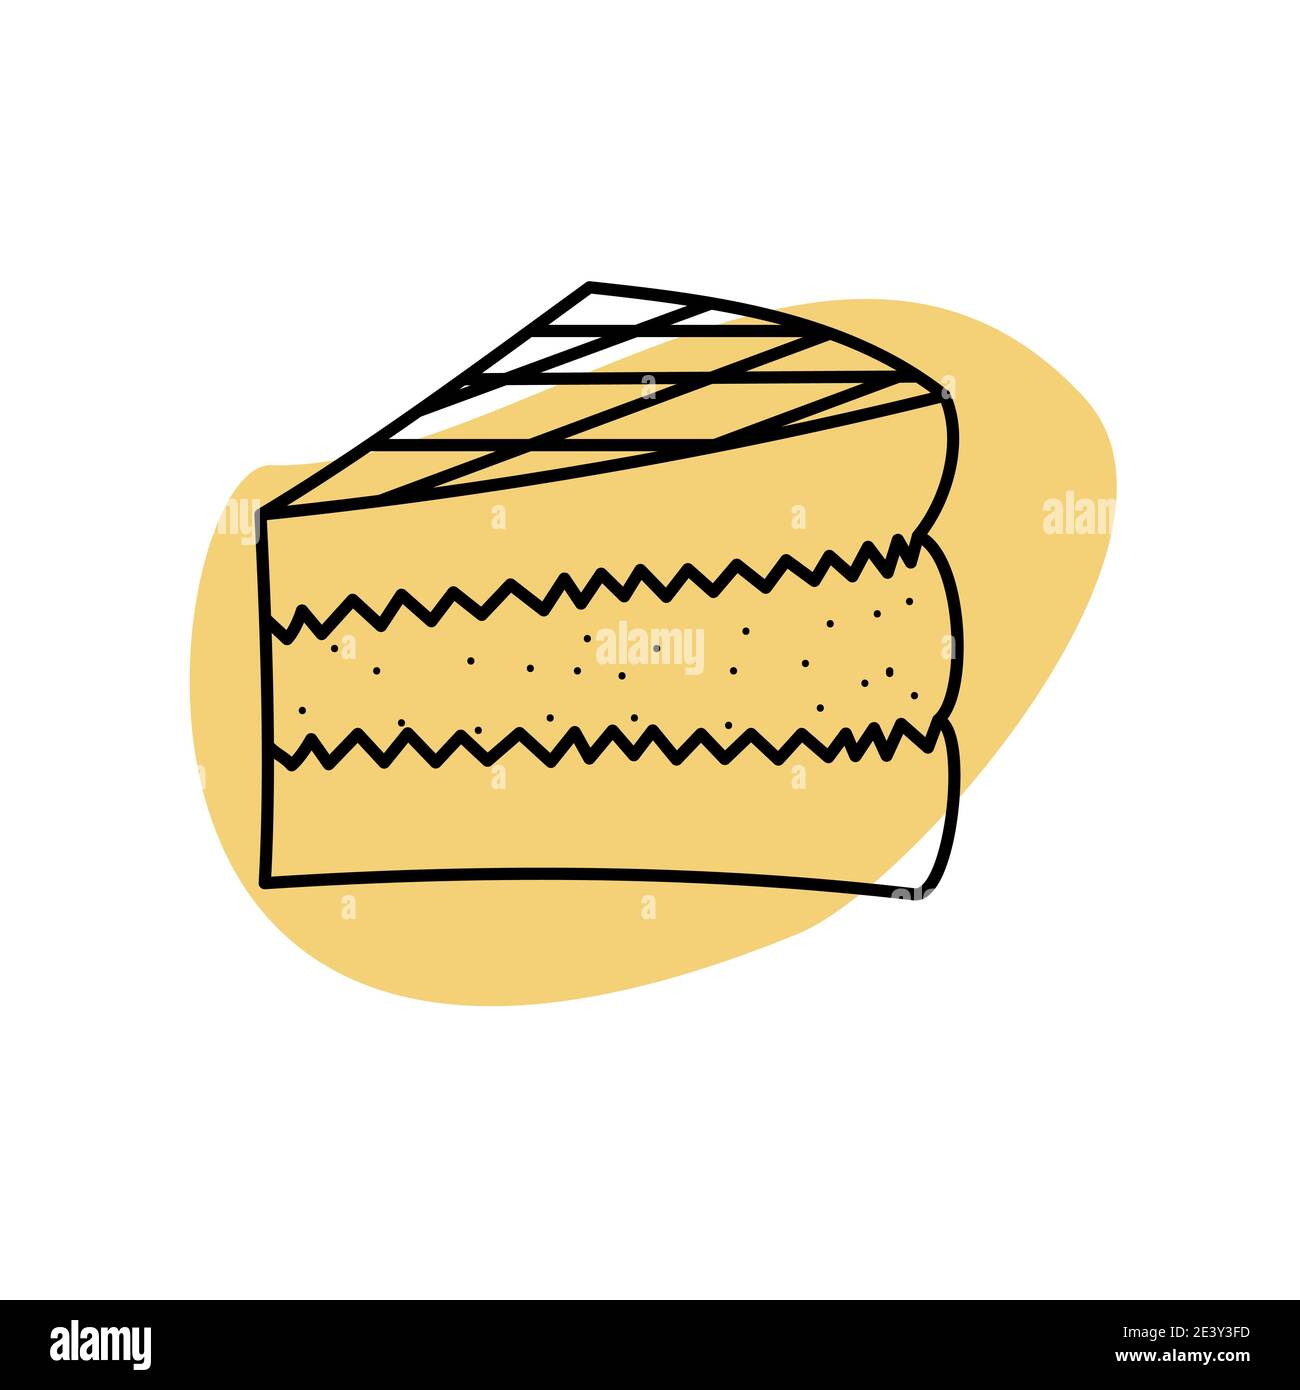 Cake Doodle Symbol Vektor-Illustration für Web-Küche Dekor Stock Vektor